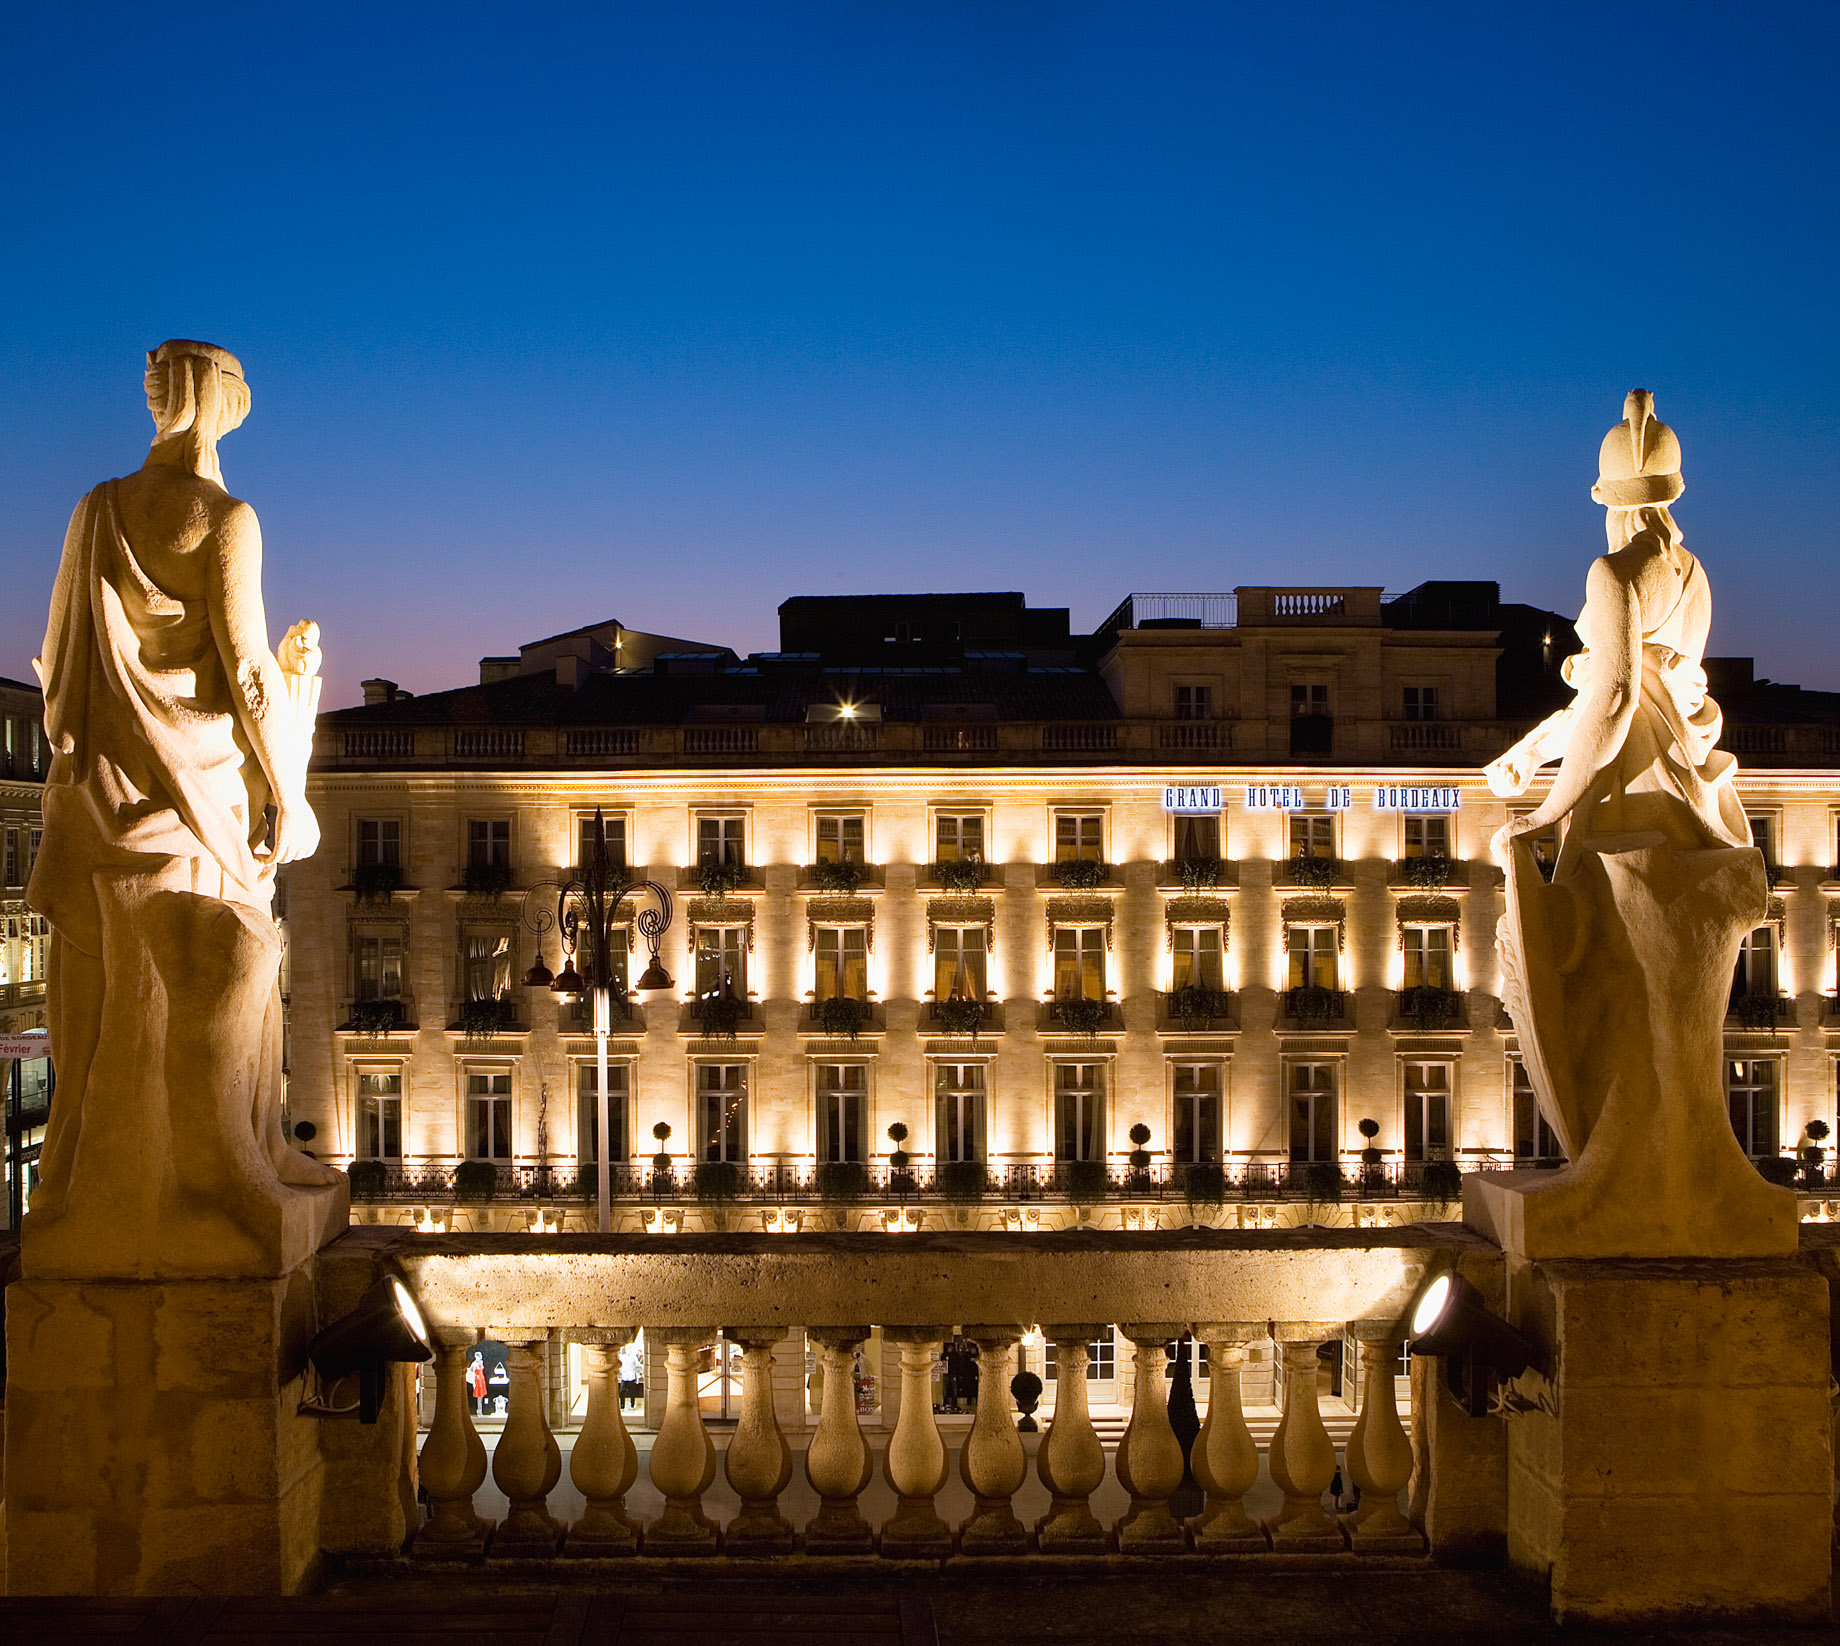 InterContinental Bordeaux Le Grand Hotel – Bordeaux, France – Night Facade View